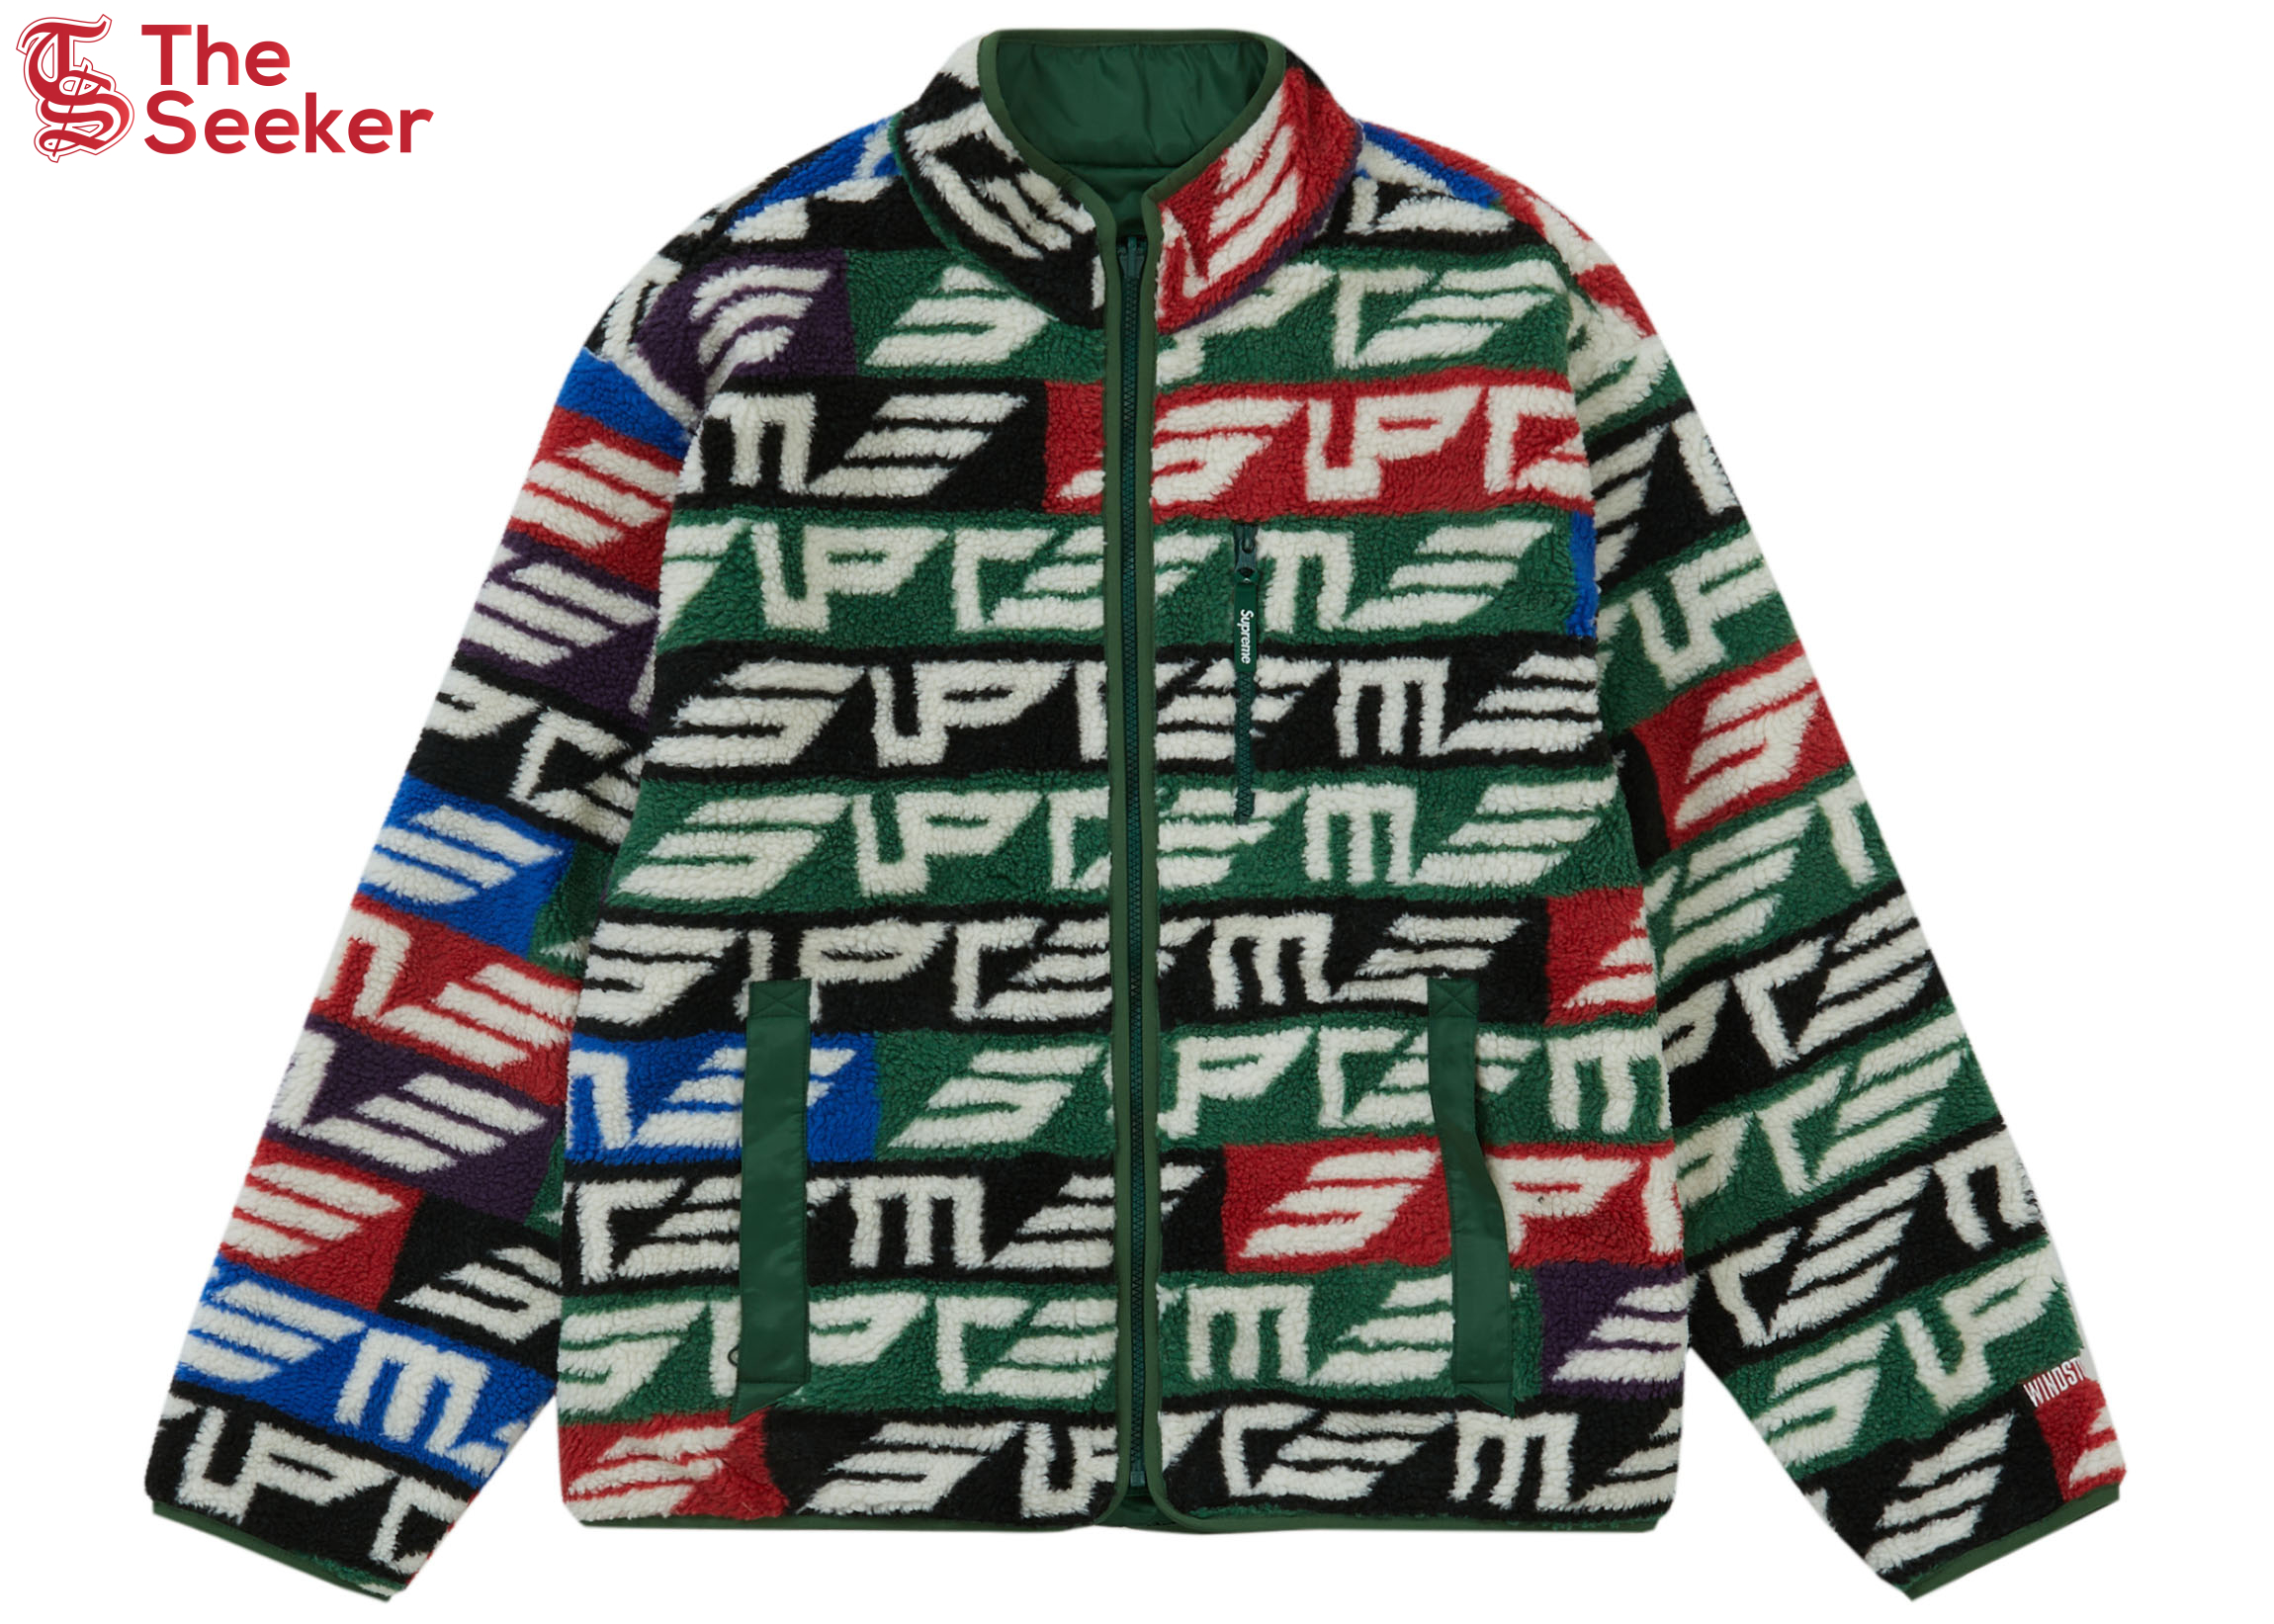 Supreme Geo Reversible WINDSTOPPER Fleece Jacket Multicolor